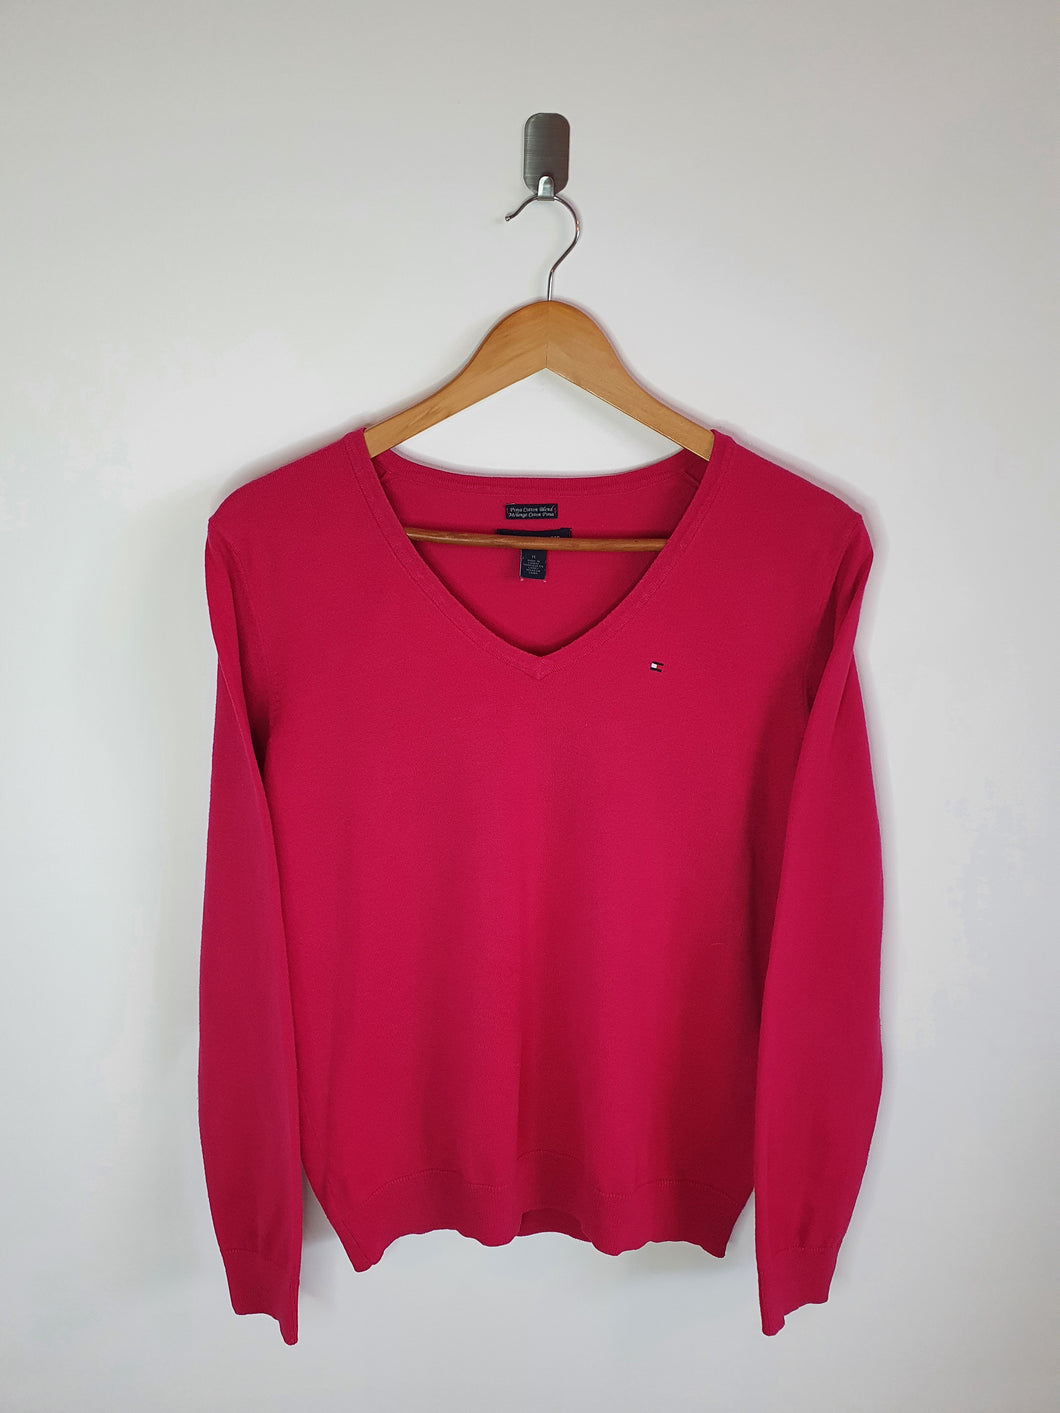 Tommy Hilfiger Womens Hot Pink V Neck Sweatshirt - M